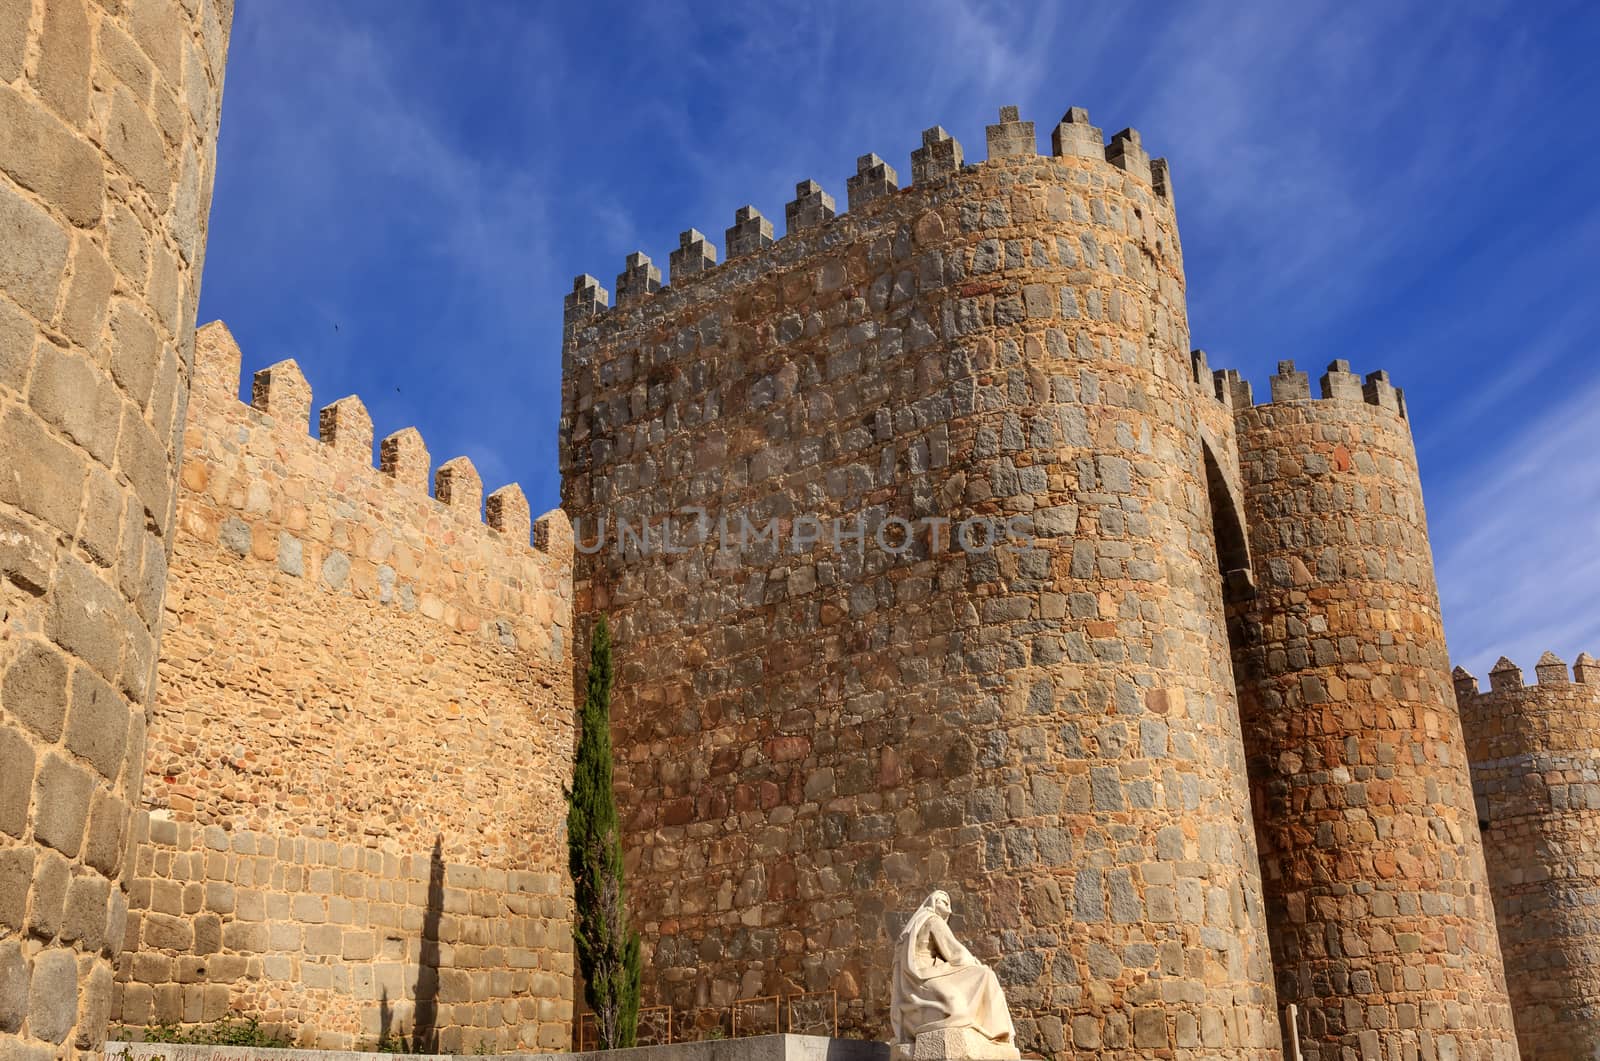 White Saint Teresa Statue Avila Castle Walls Swallows Castile by bill_perry